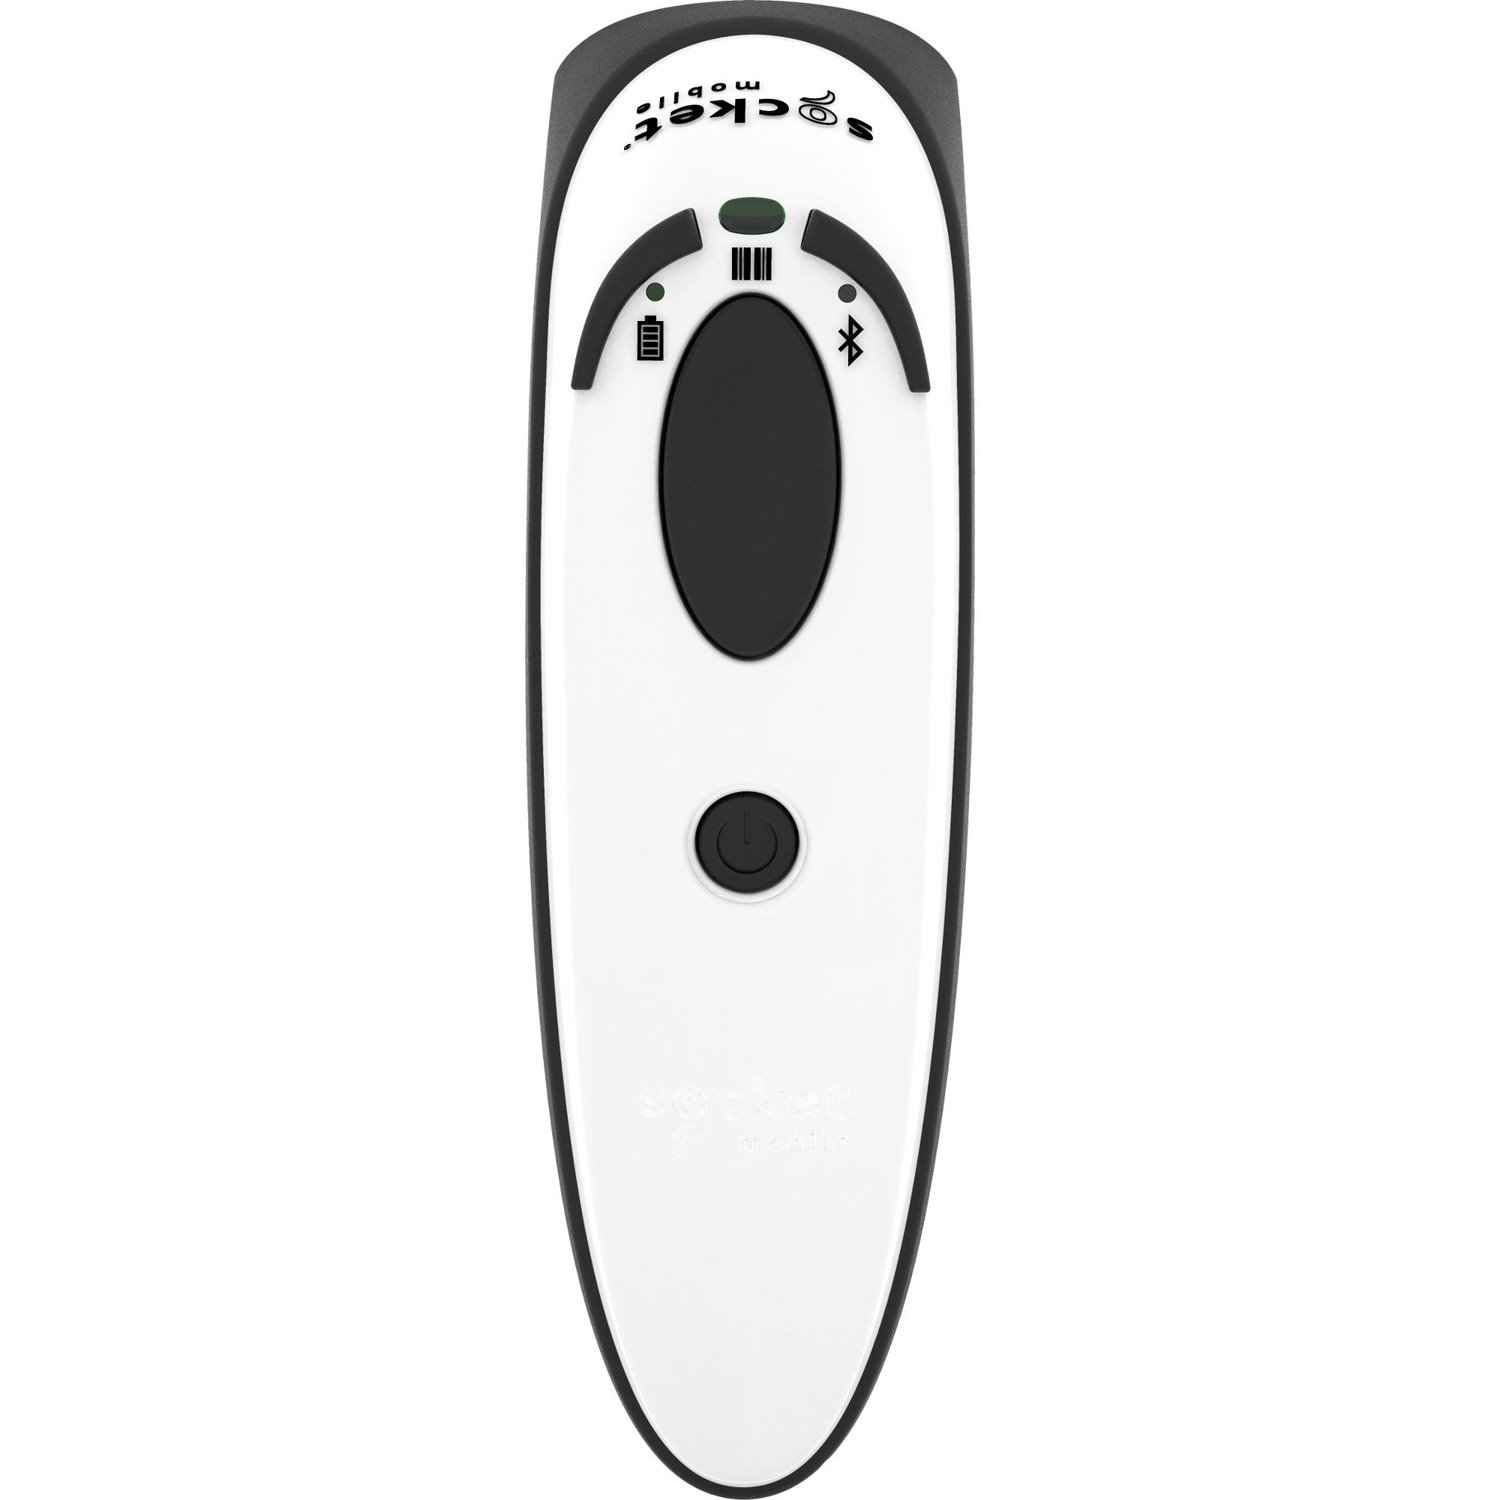 Socket Mobile DuraScan D730 Handheld Barcode Scanner - Wireless Connectivity - Black